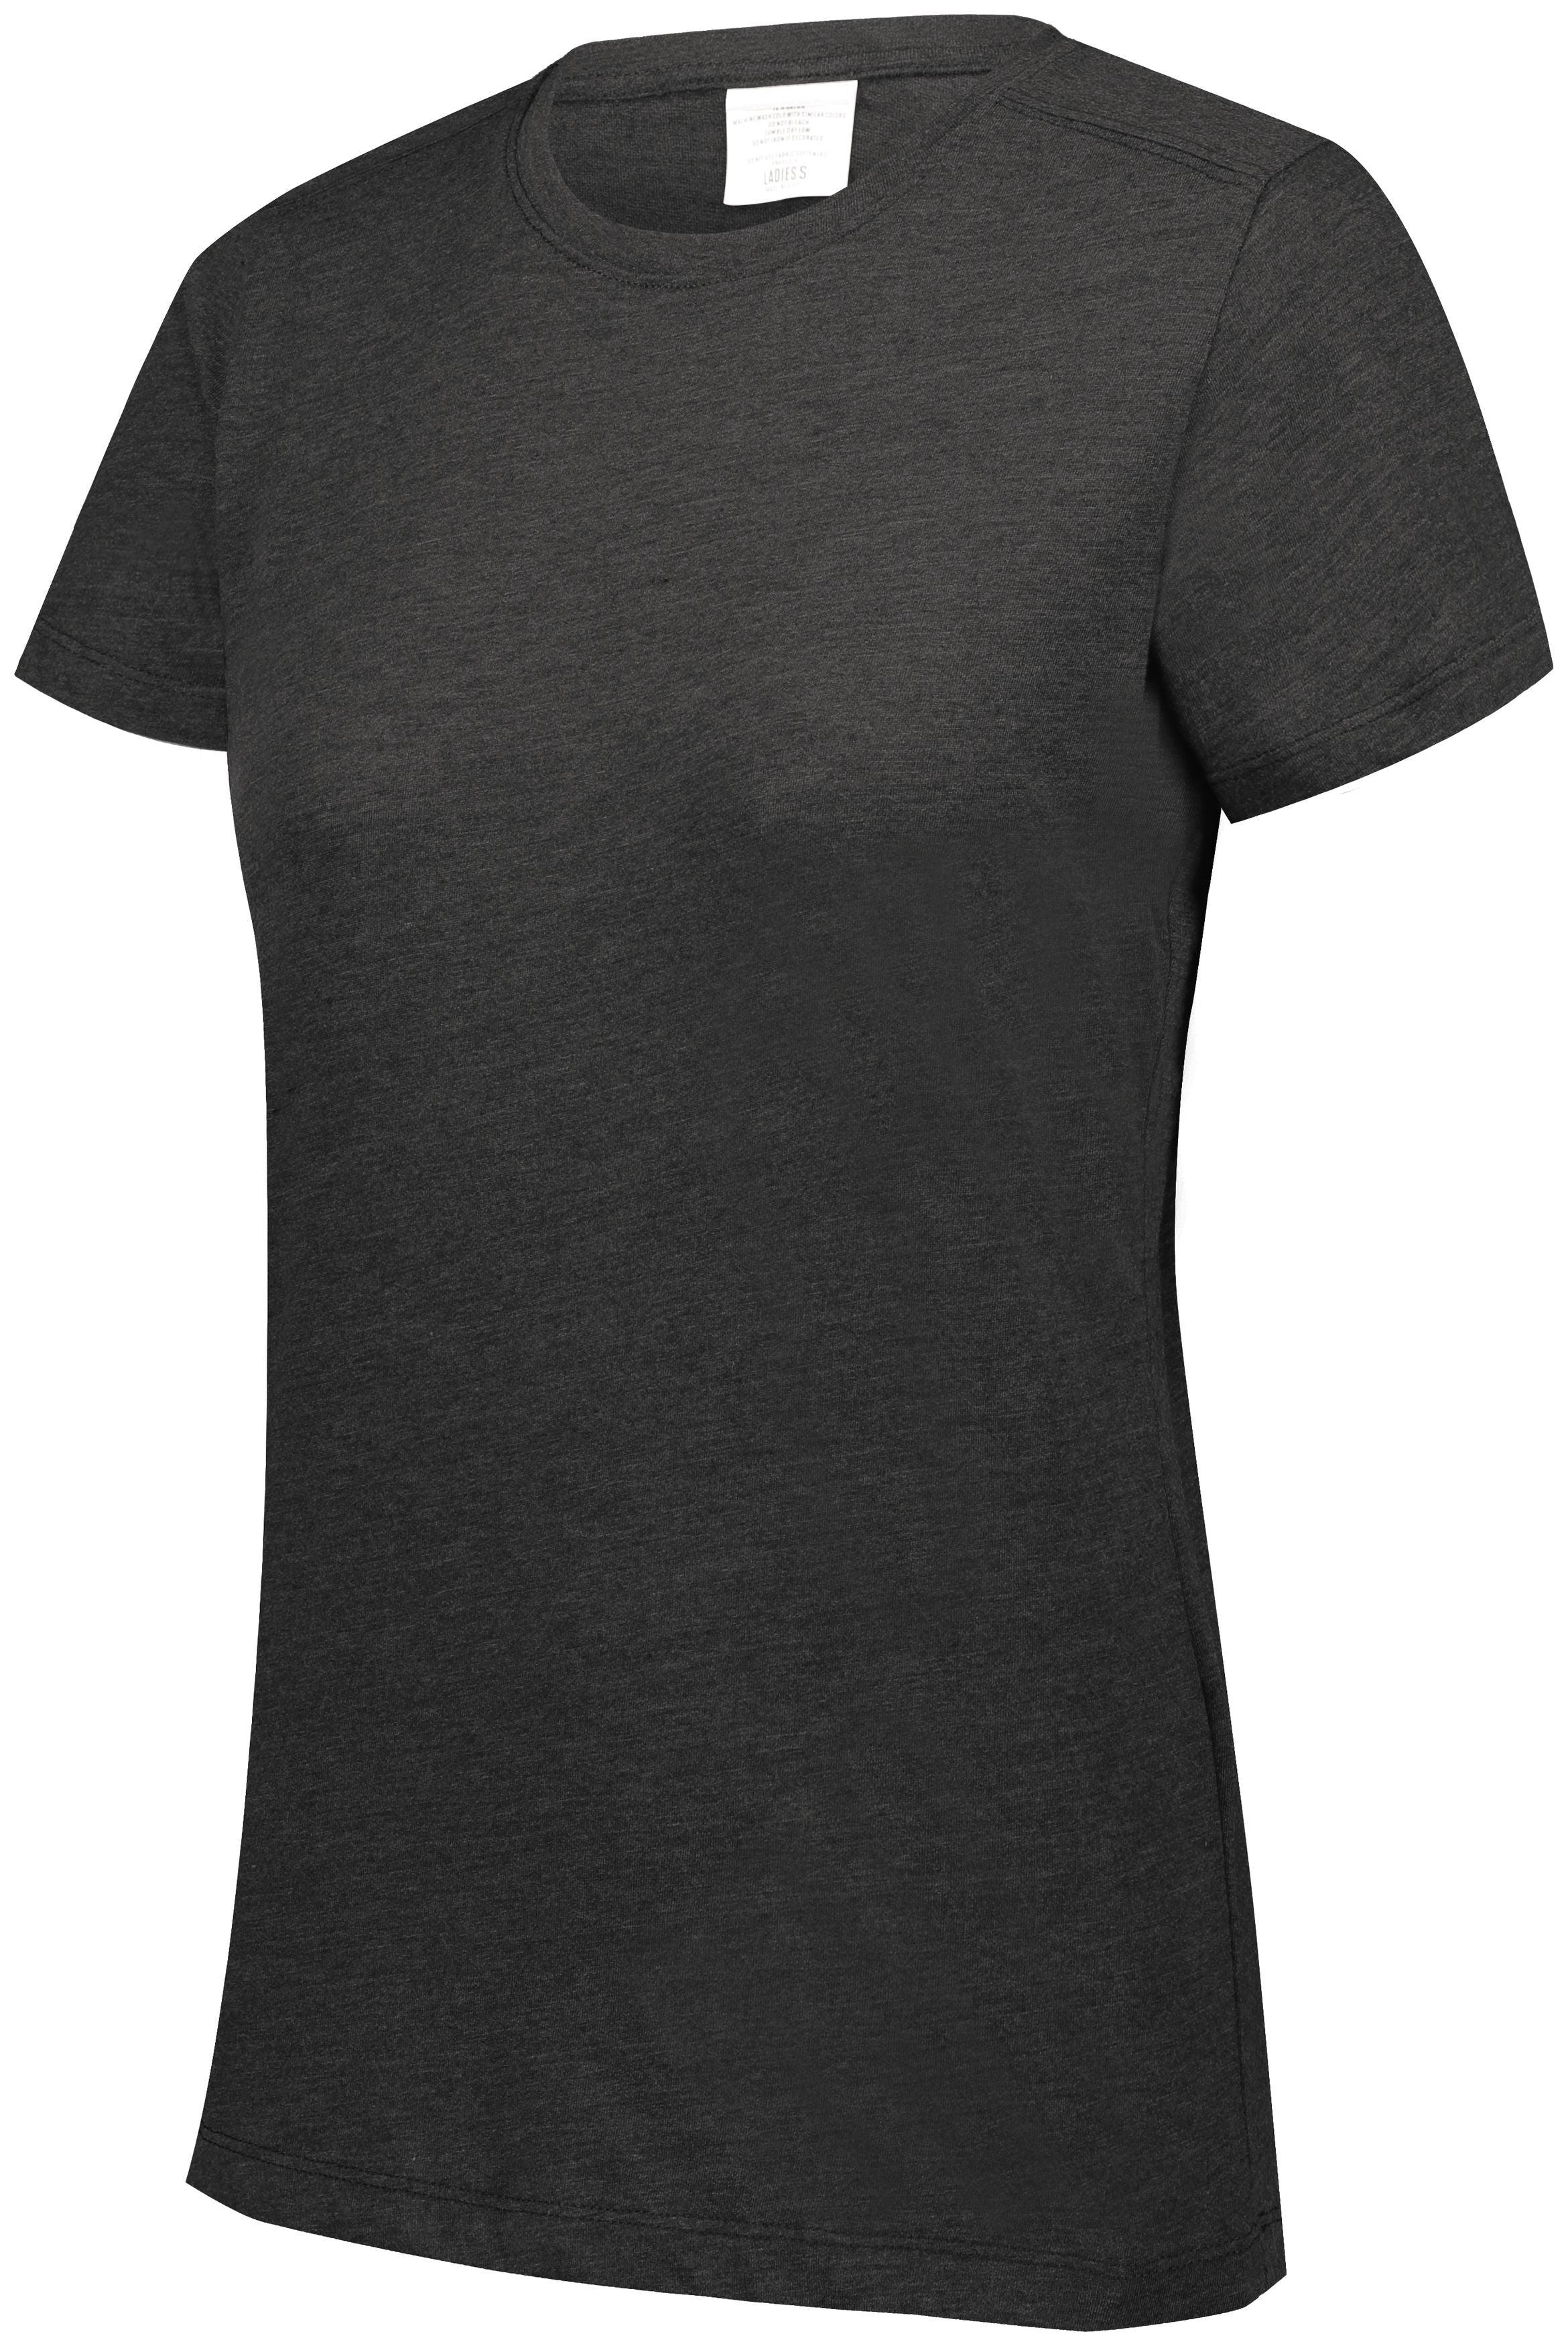 Augusta Sportswear Ladies Tri-Blend T-Shirt